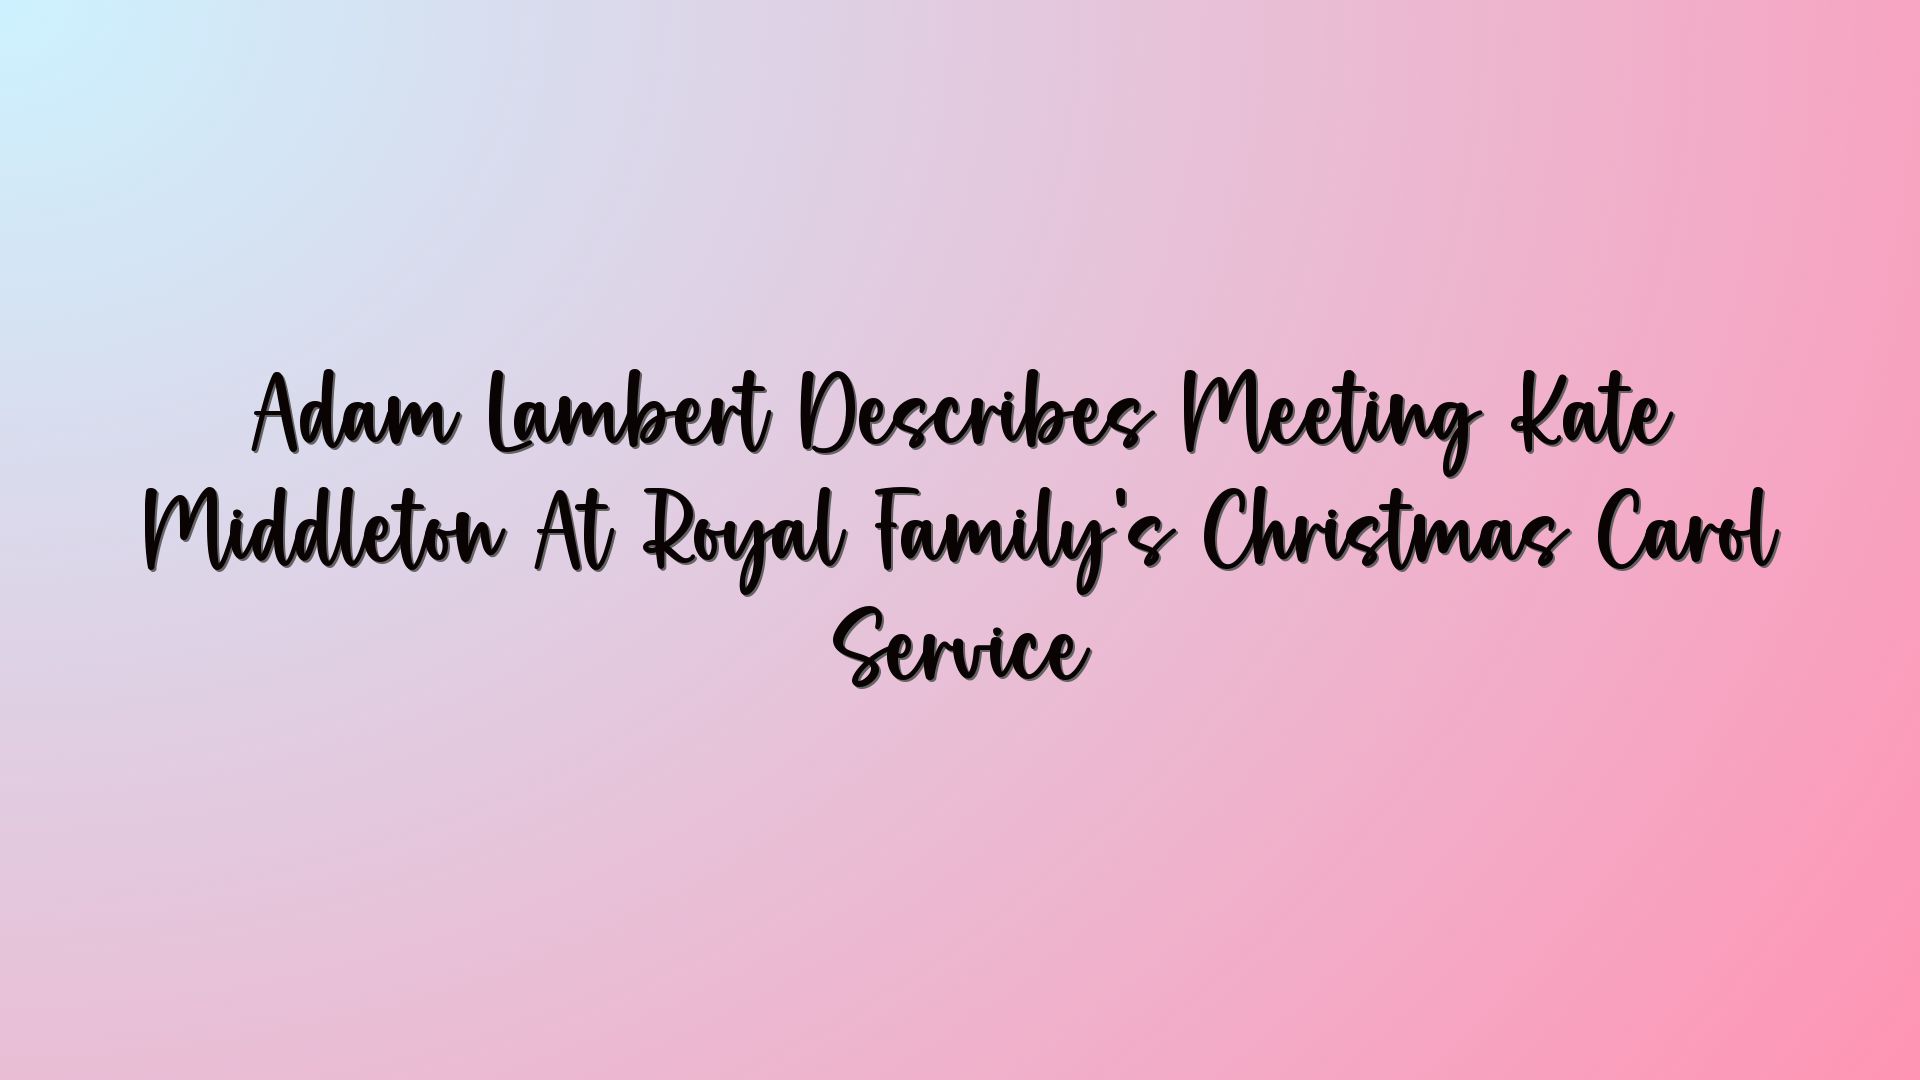 Adam Lambert Describes Meeting Kate Middleton At Royal Family’s Christmas Carol Service